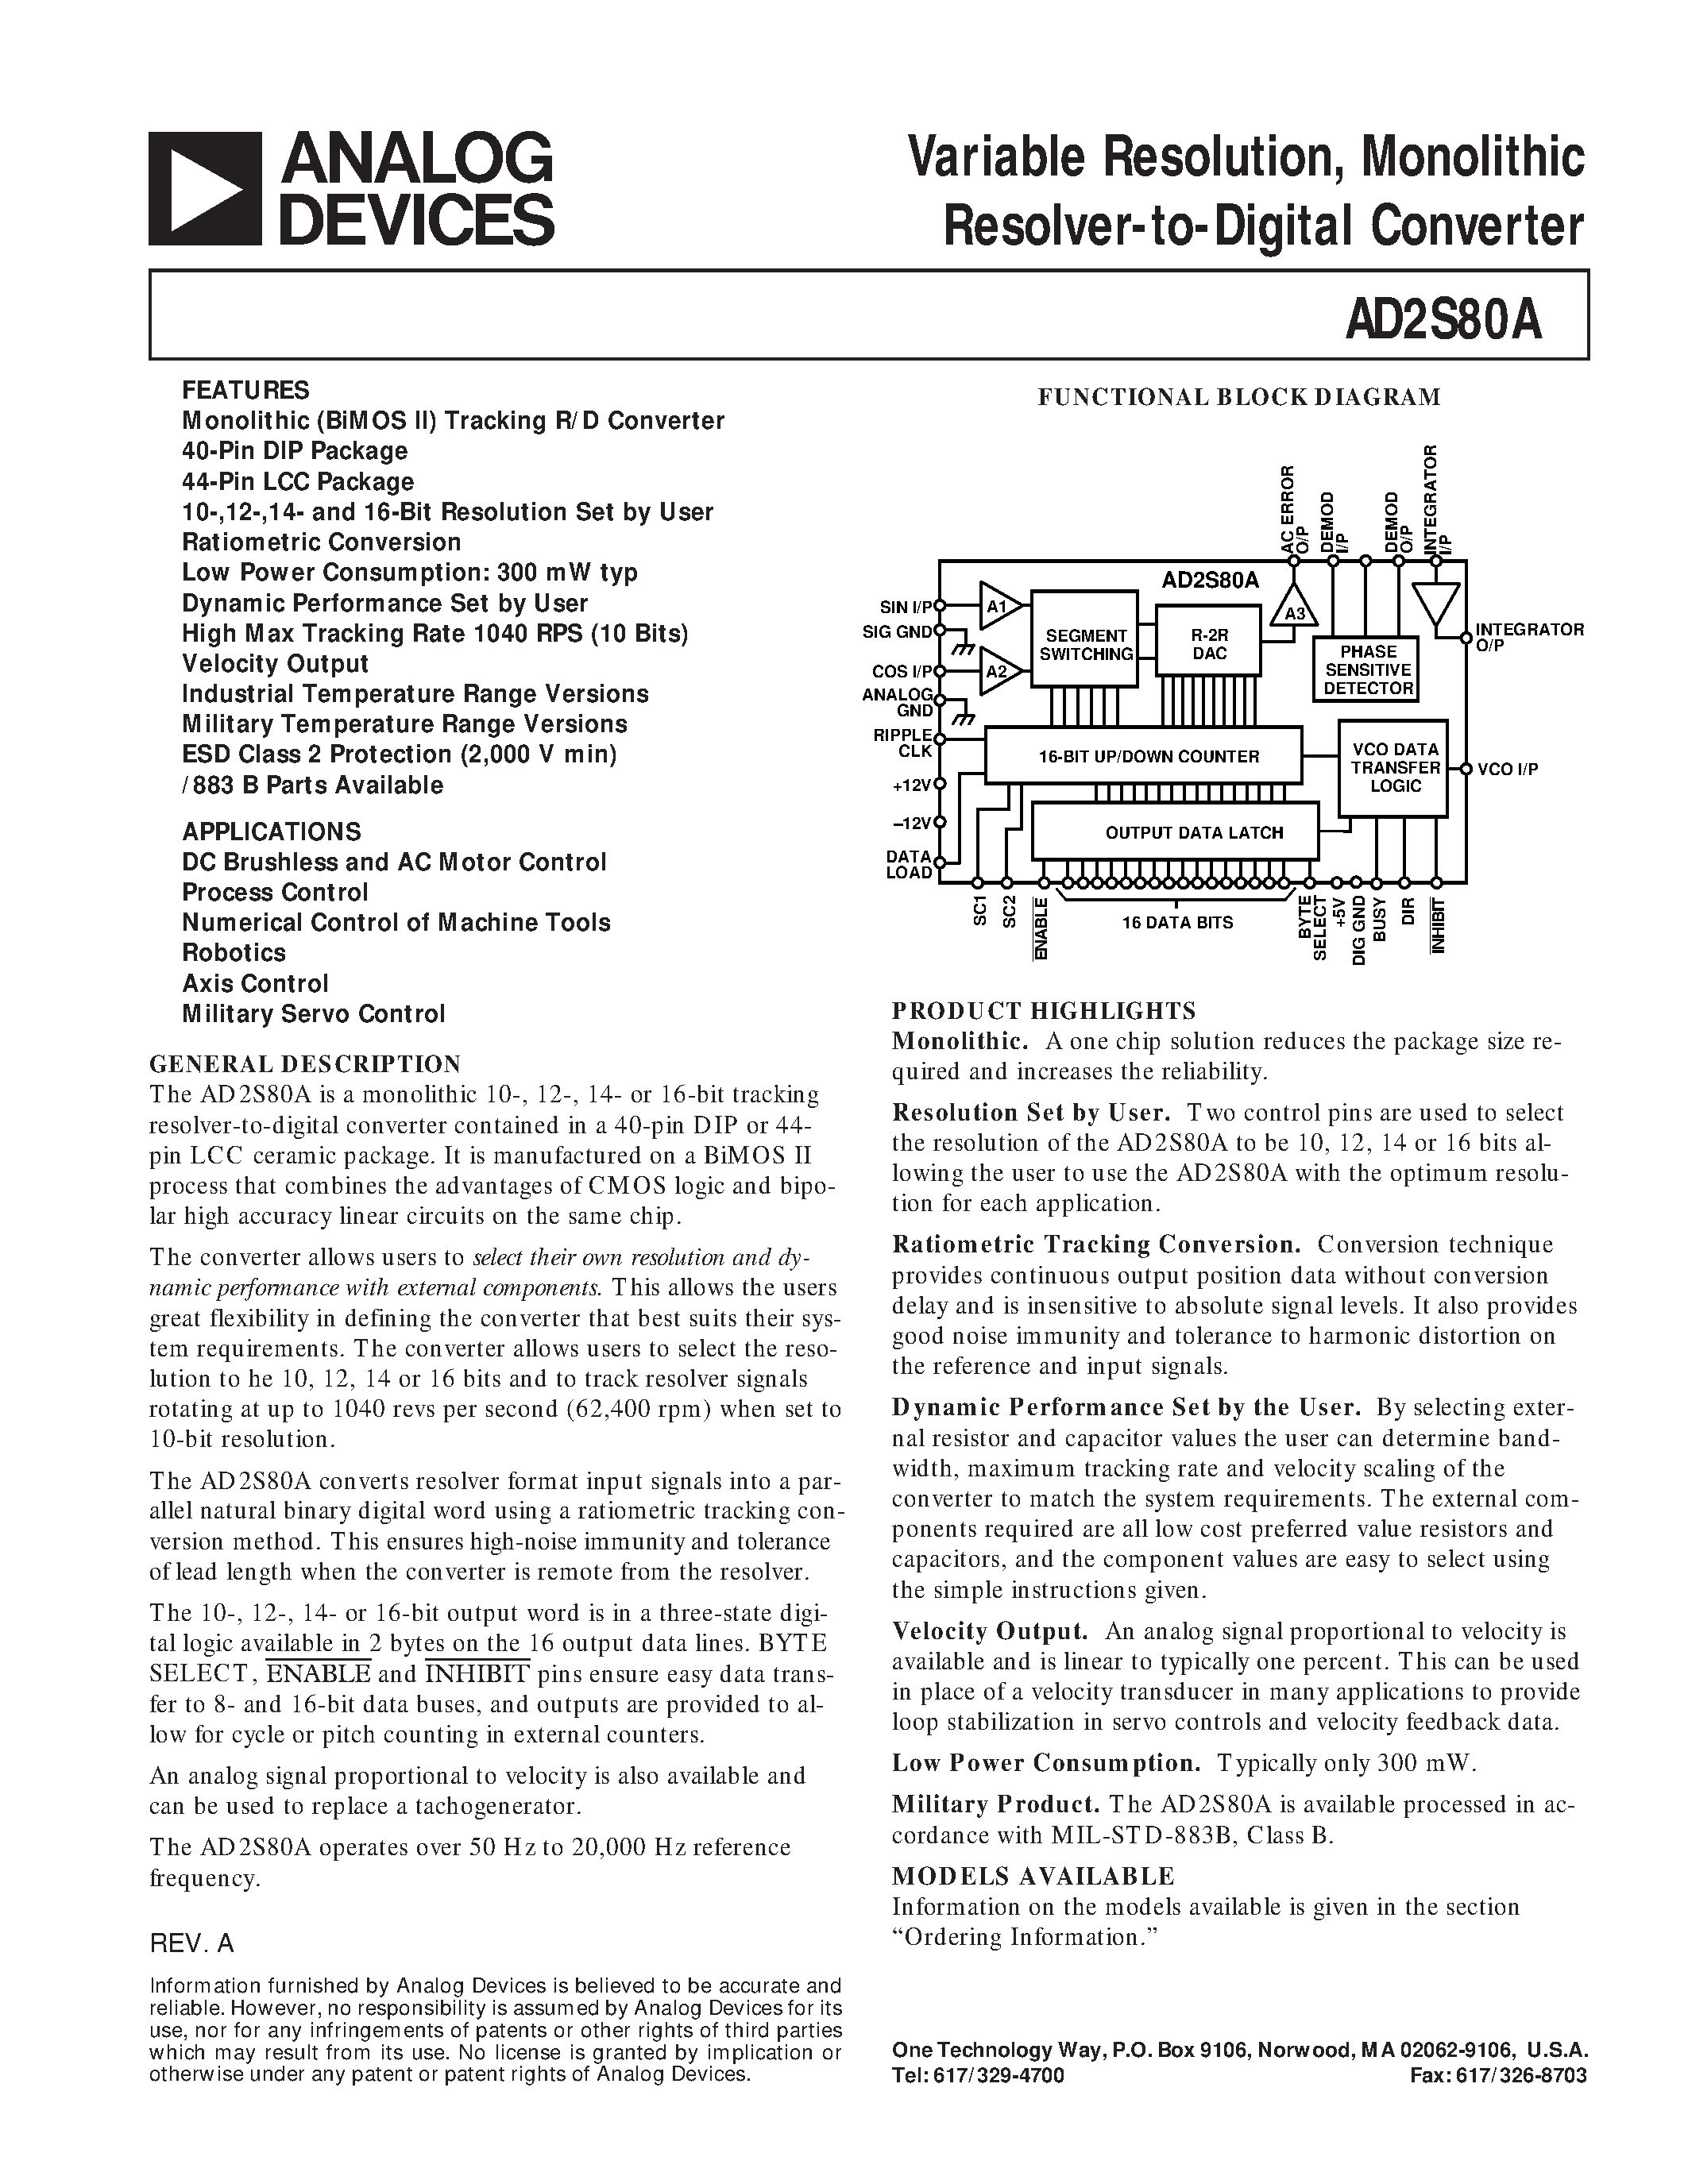 Datasheet AD2S80ASD/883B - Variable Resolution/ Monolithic Resolver-to-Digital Converter page 1